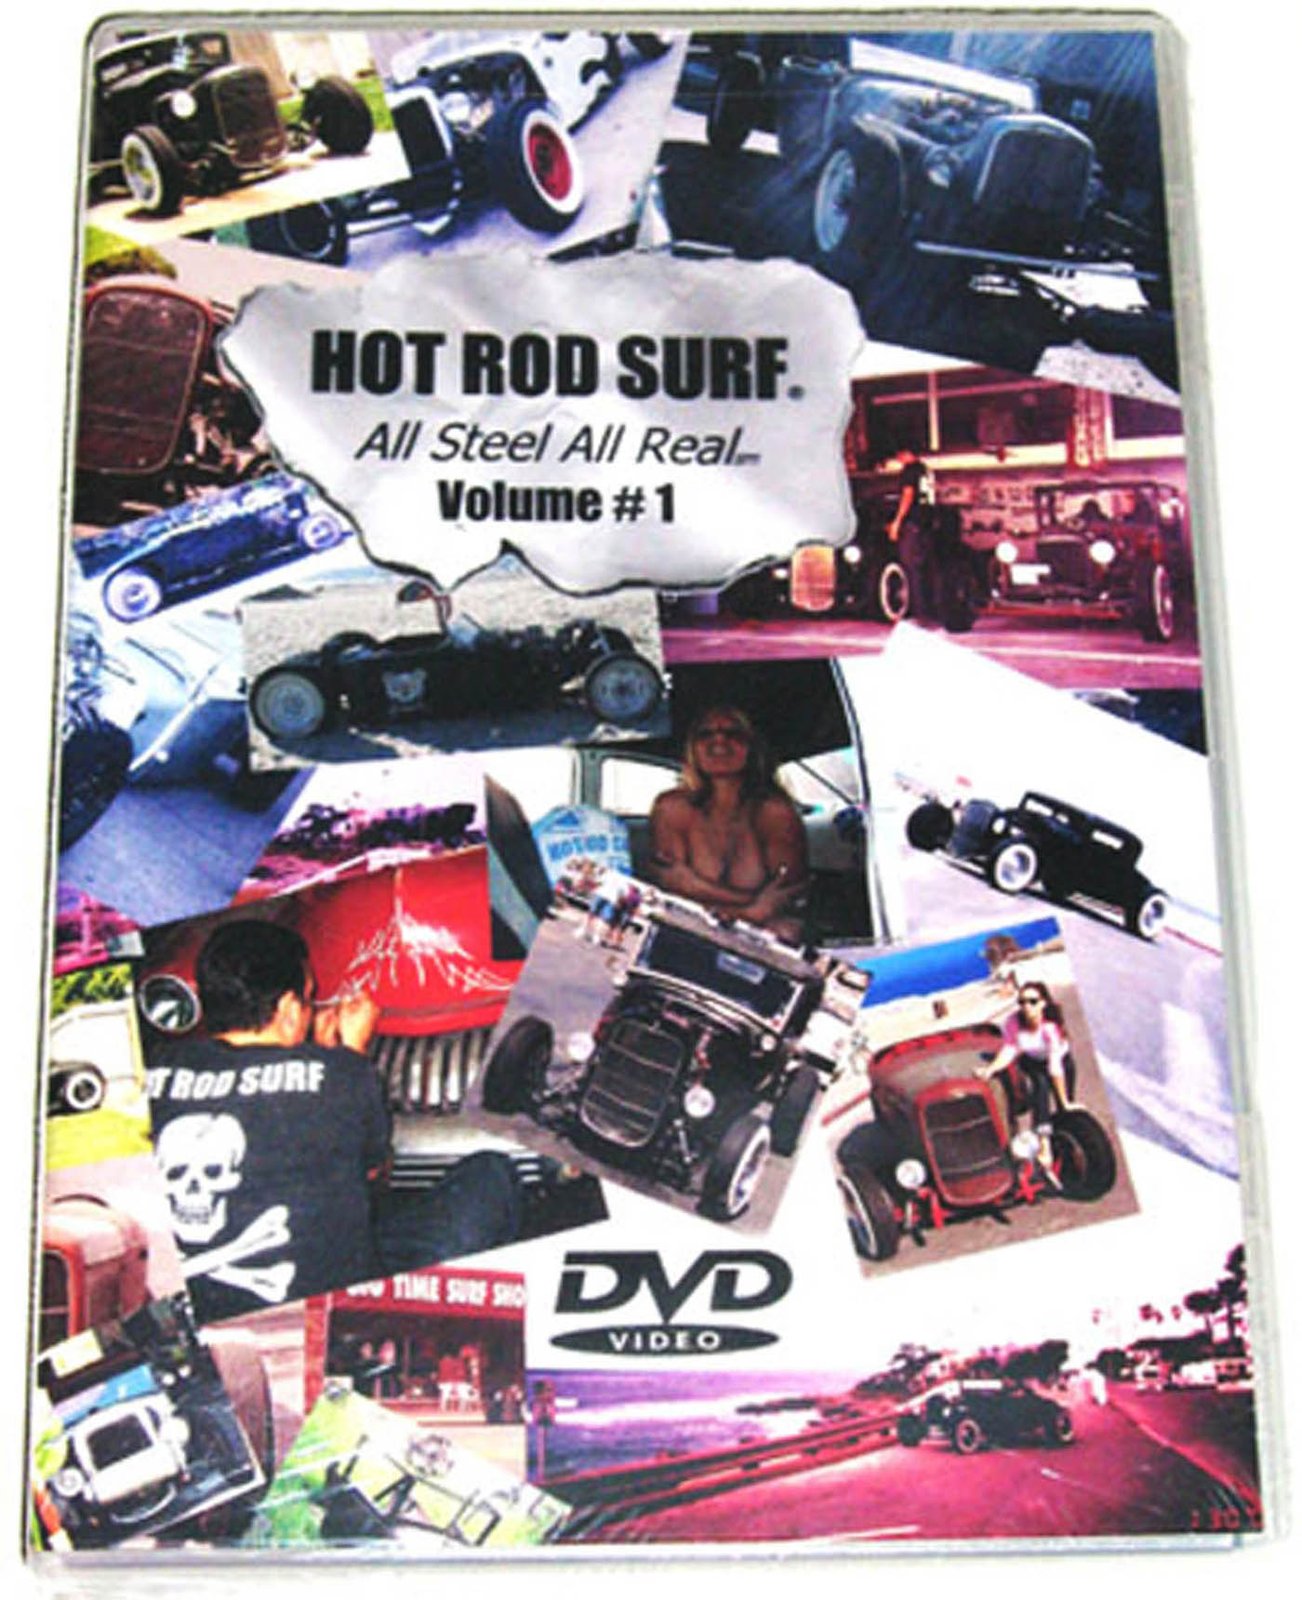 Hot Rod Surf ® HOTRODSURF presents ‘All Steel All Real' Volume 1 - DVD Movie